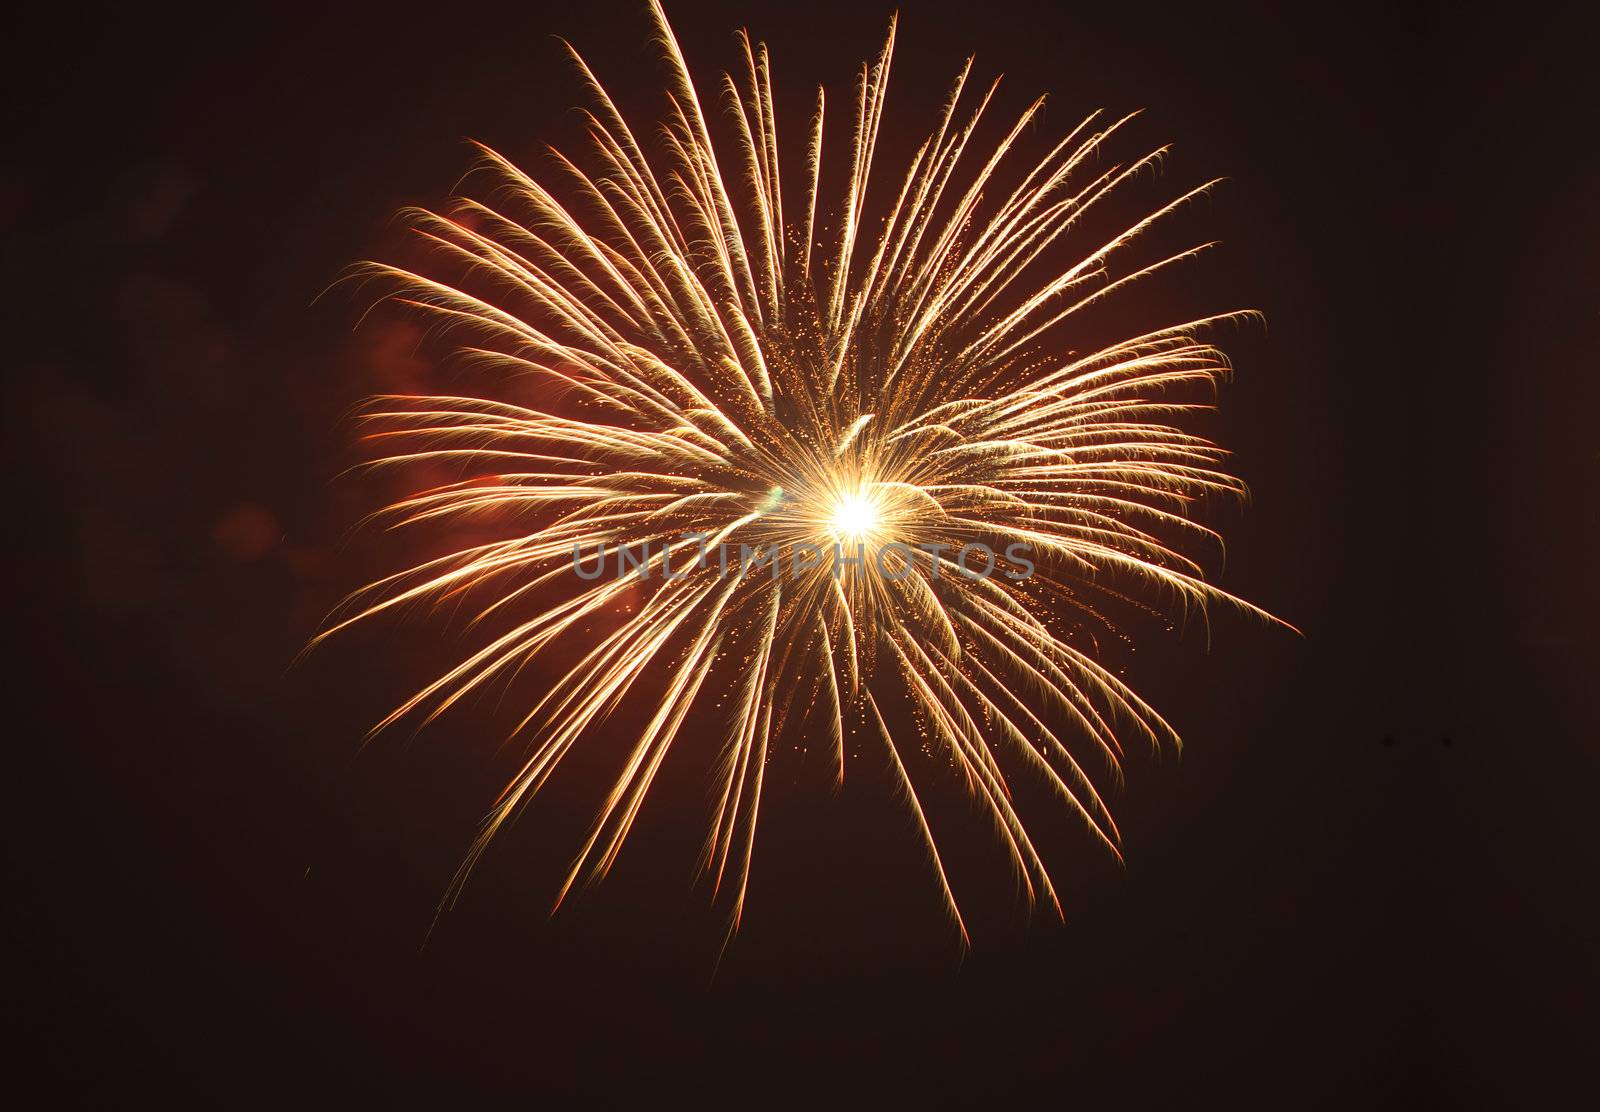 Fireworks to celebrate festival by jackq